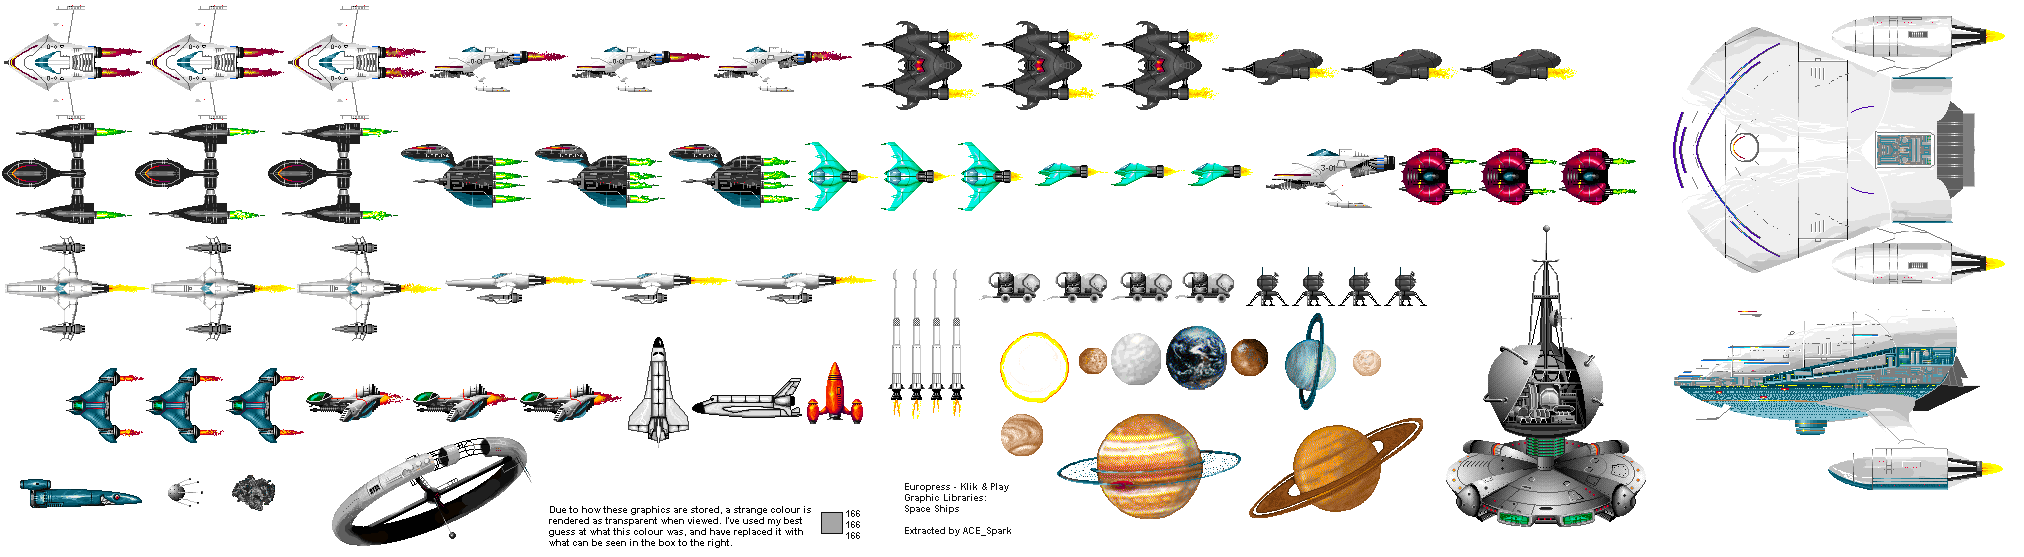 Klik & Play - Spaceships & Planets